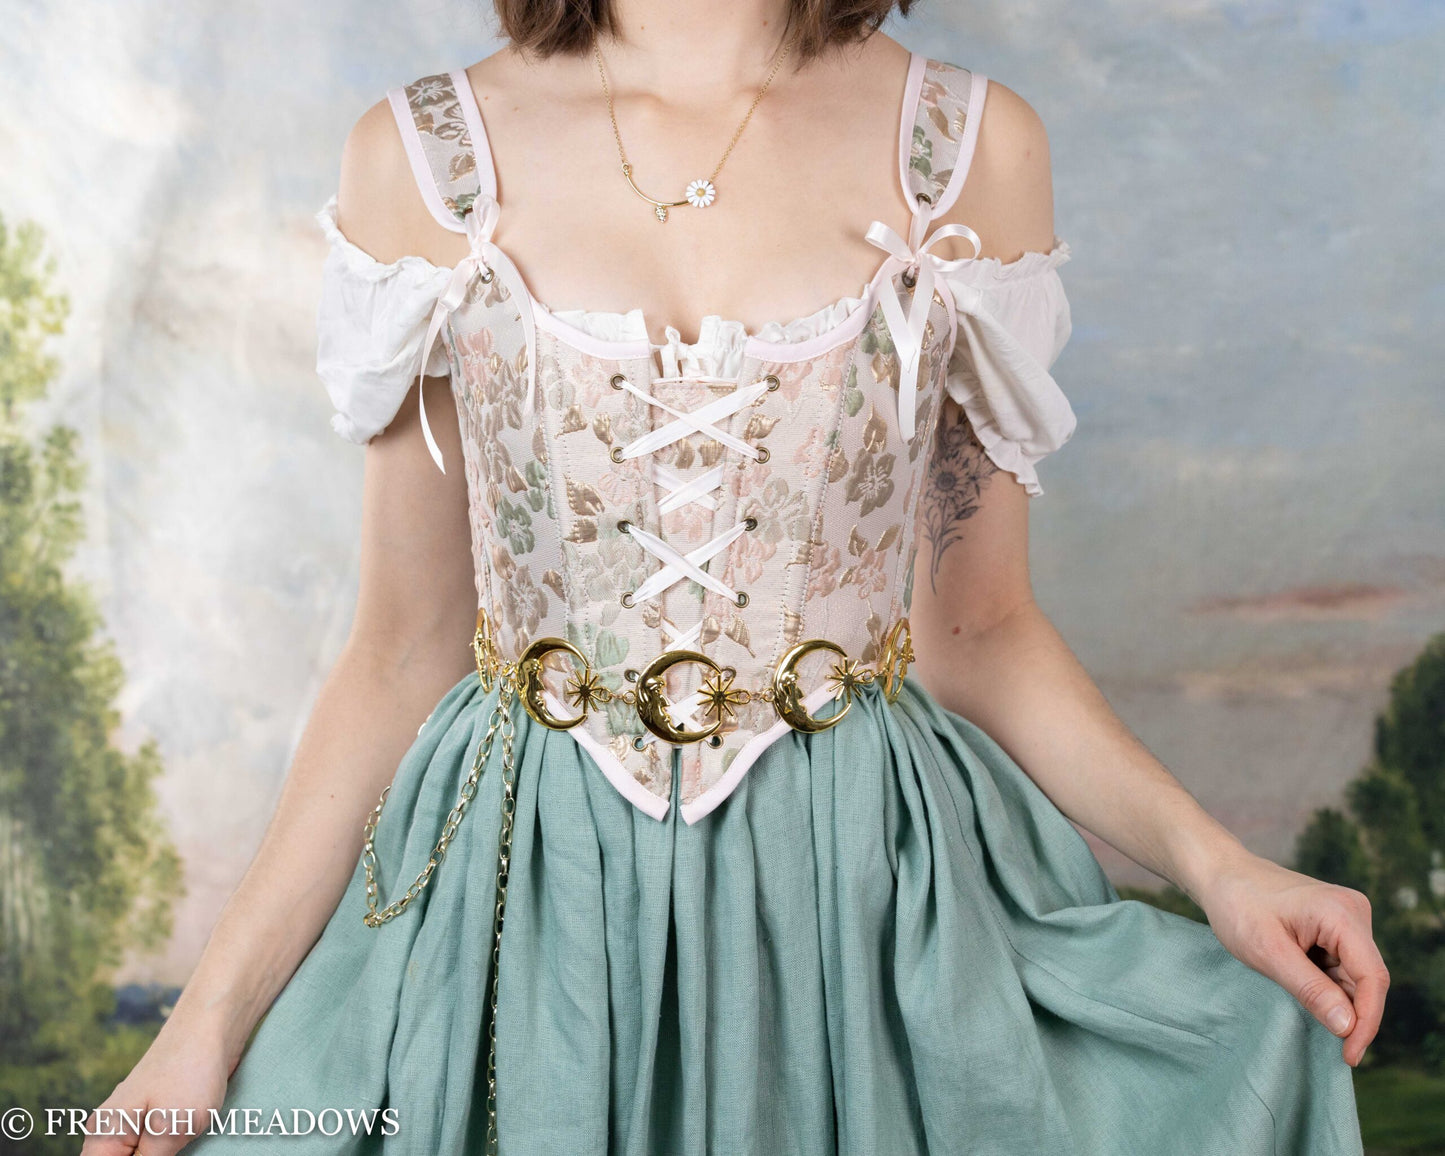 Load image into Gallery viewer, Sage Green Linen Renaissance Skirt
